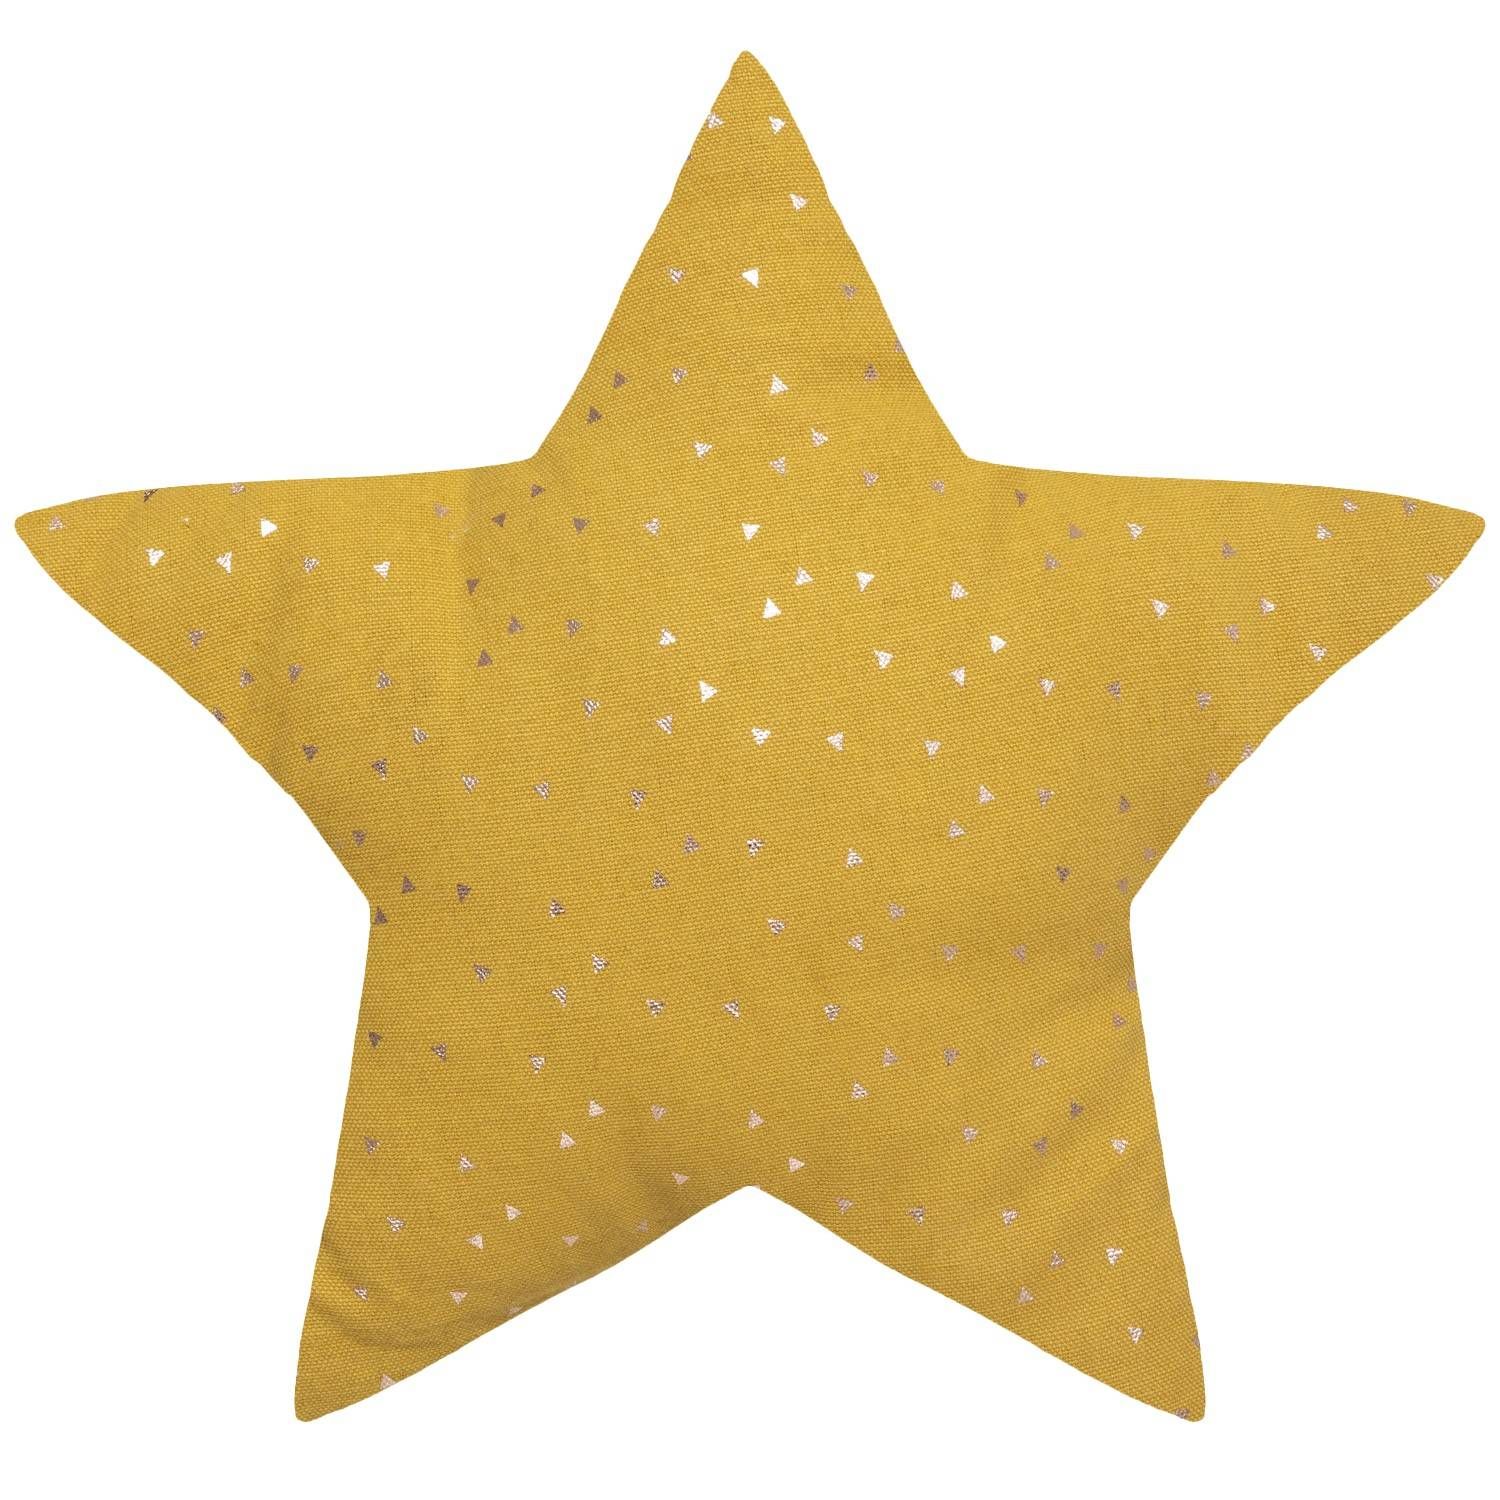 Atmosphera for kids Dekorační polštář ve tvaru hvězdy, žlutý, bavlna, 28 x 45 cm - EDAXO.CZ s.r.o.